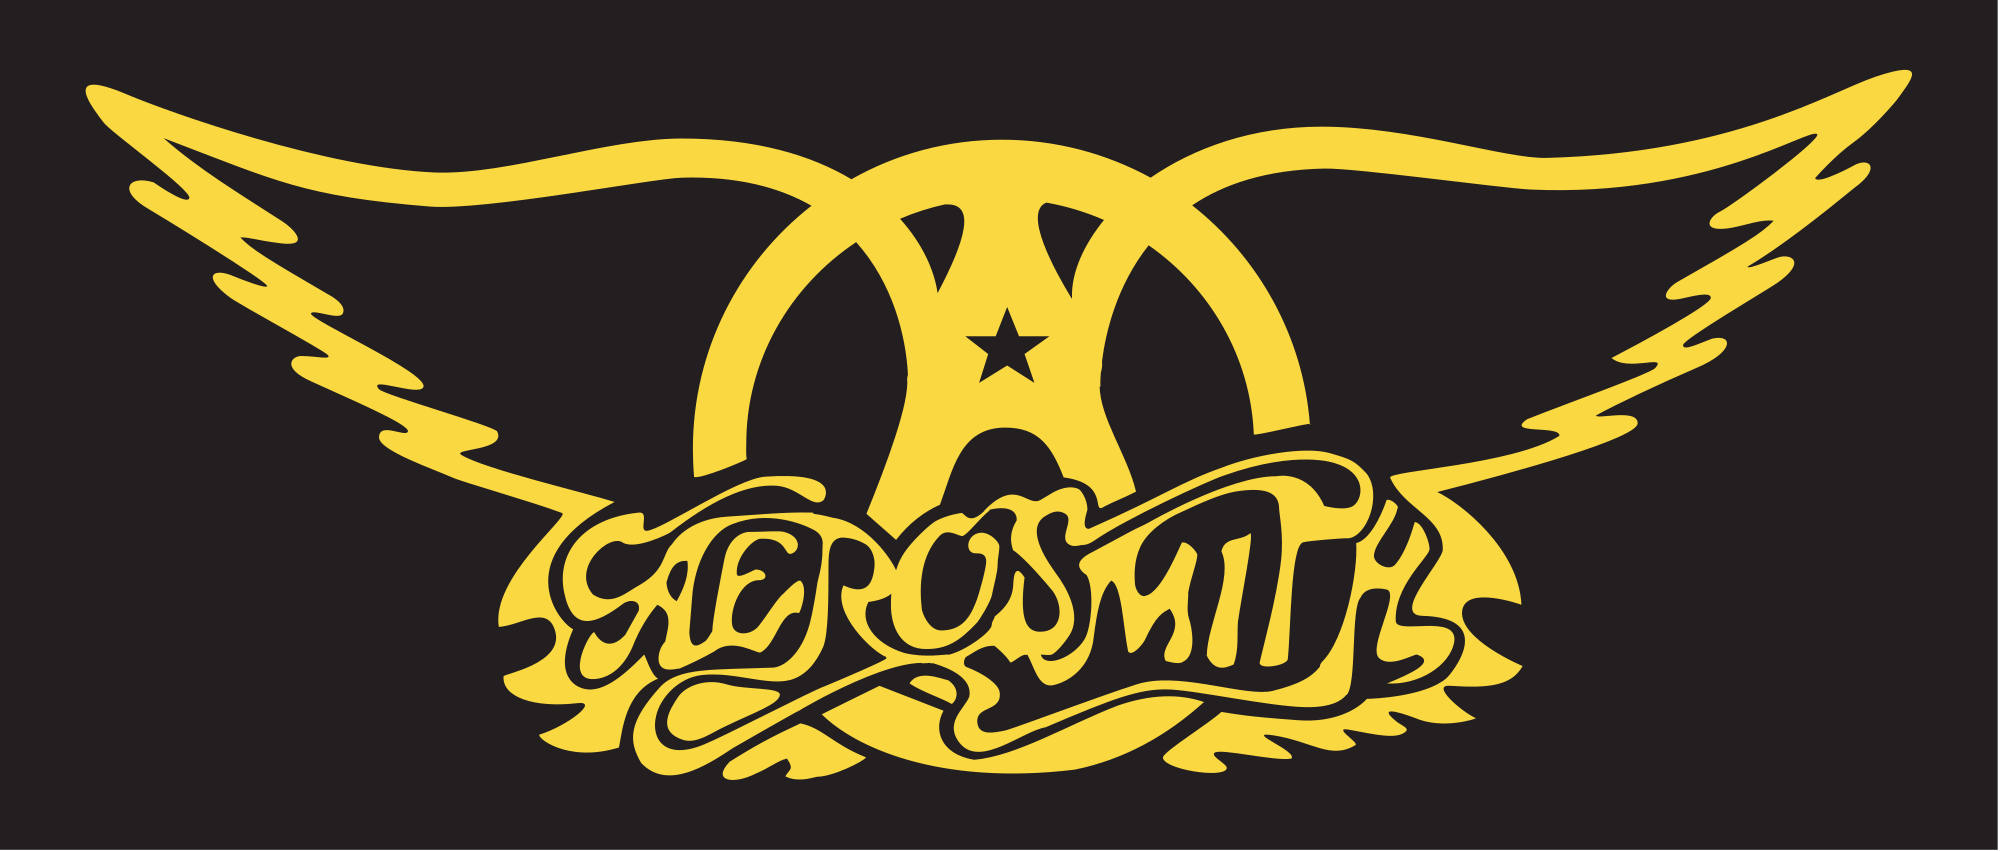 Aerosmith Logos